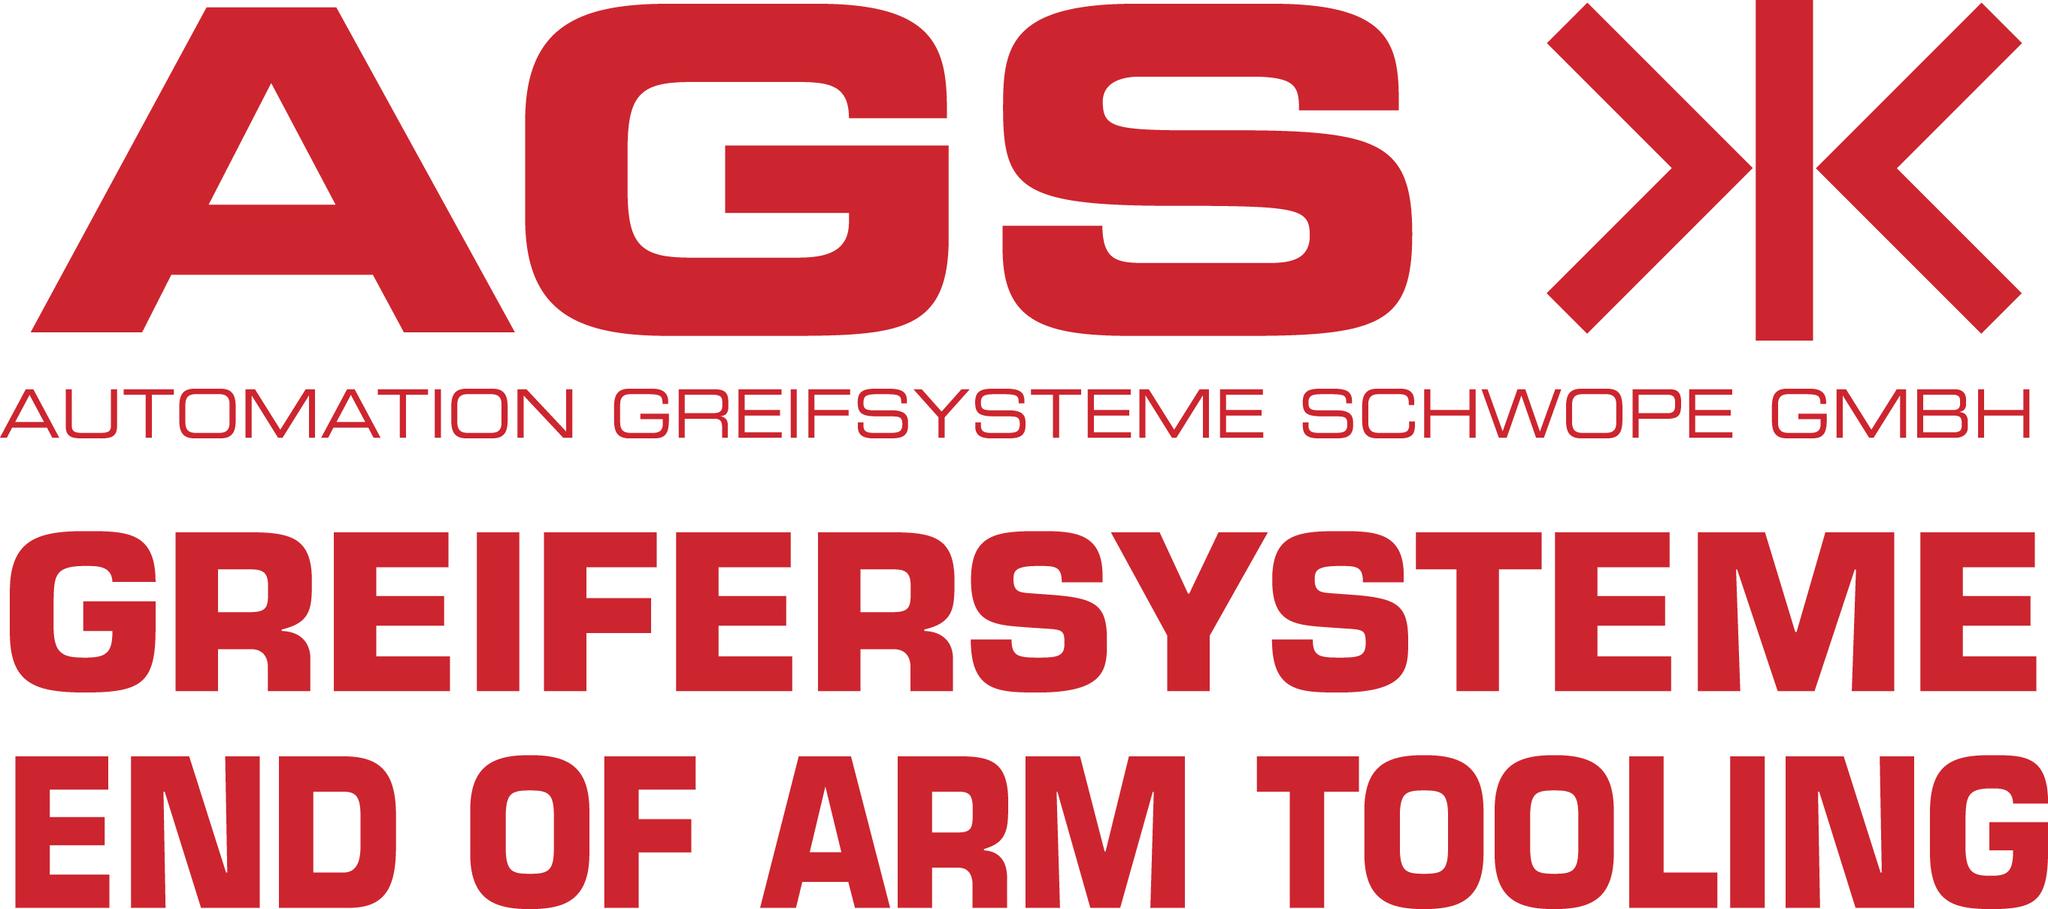 AGS Automation Greifsysteme Schwope GmbH Logo